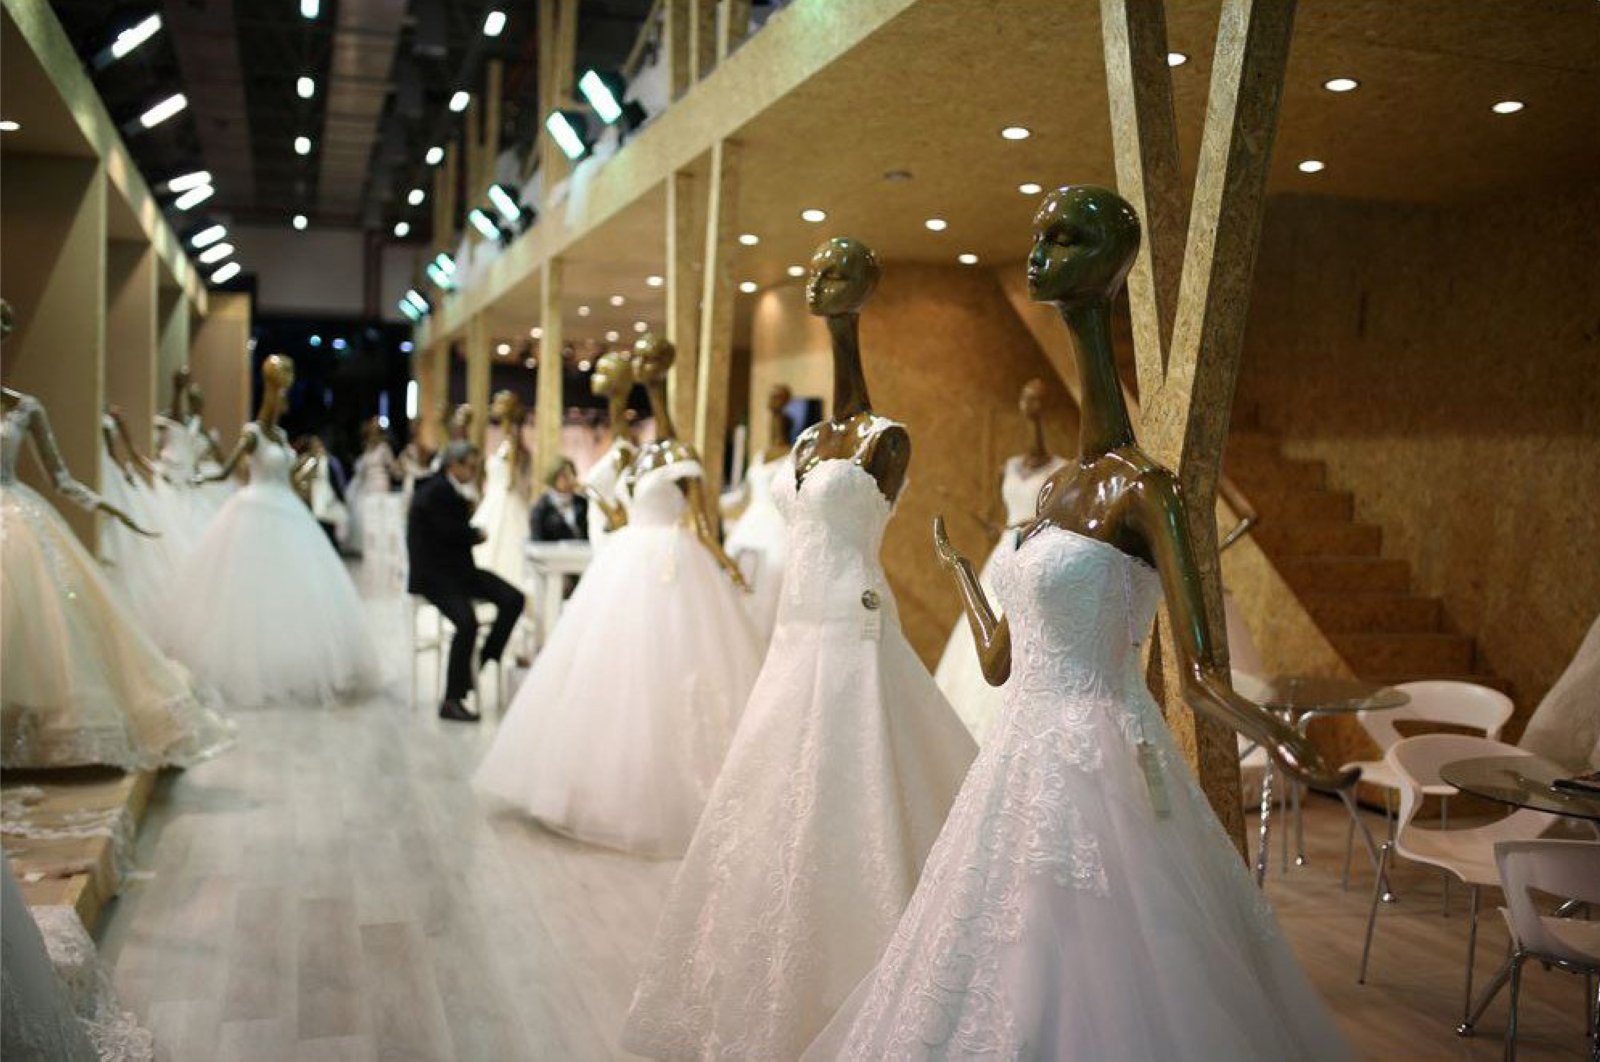 Wedding dresses are displayed at the IF Wedding Fashion Expo in İzmir, Turkey, on Jan. 26, 2019. (IHA Photo)